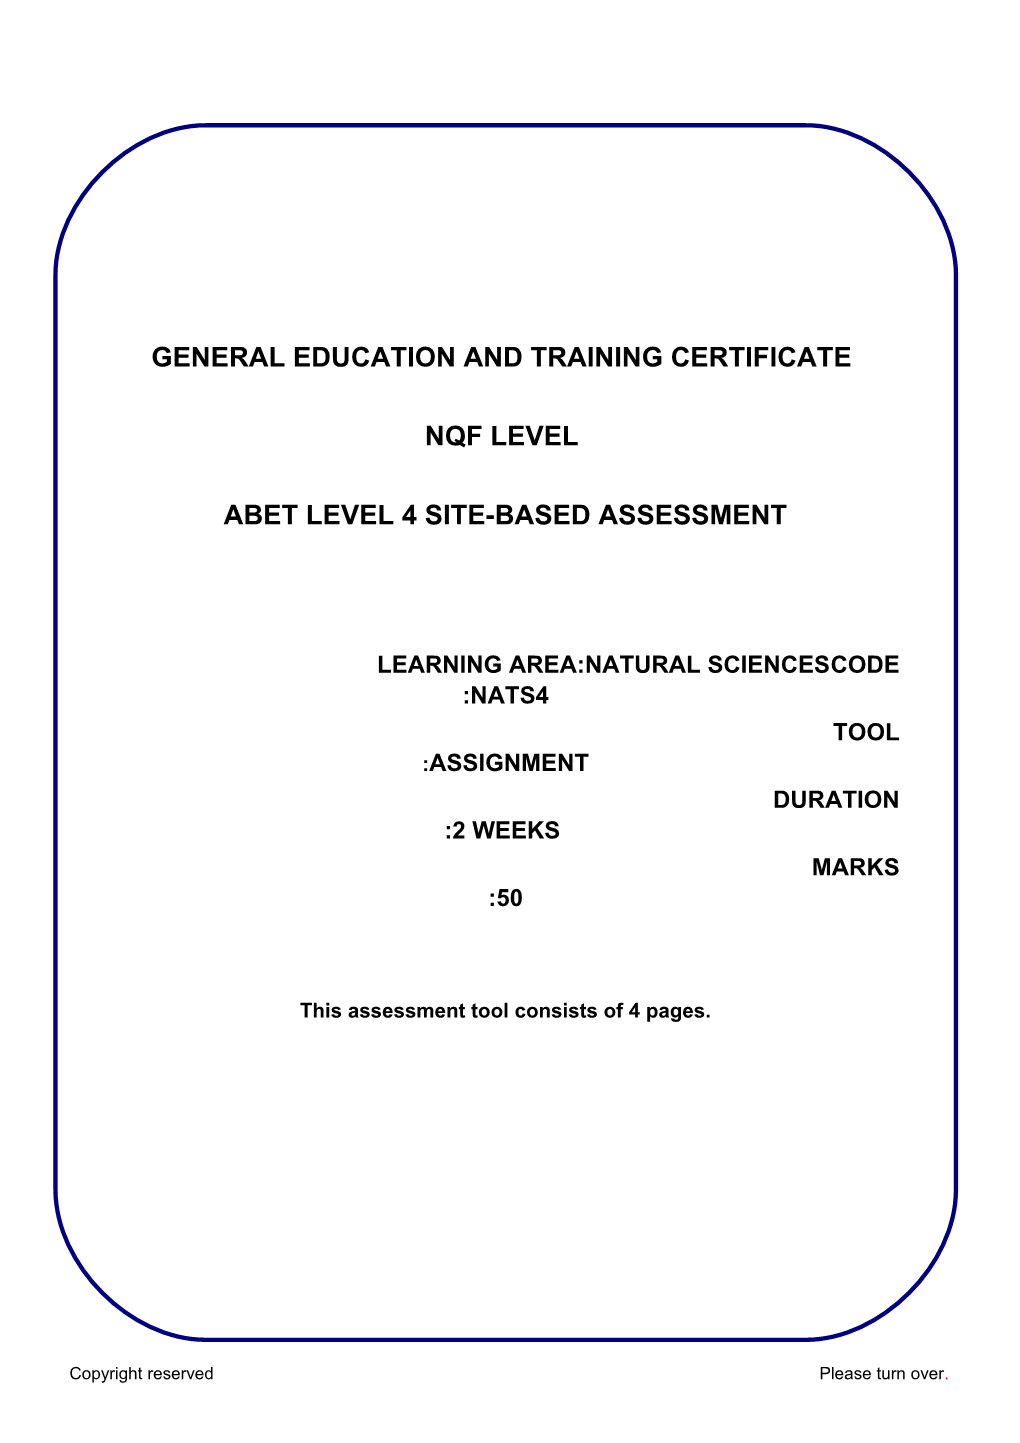 Abet Level 4 Summative Assessment s4